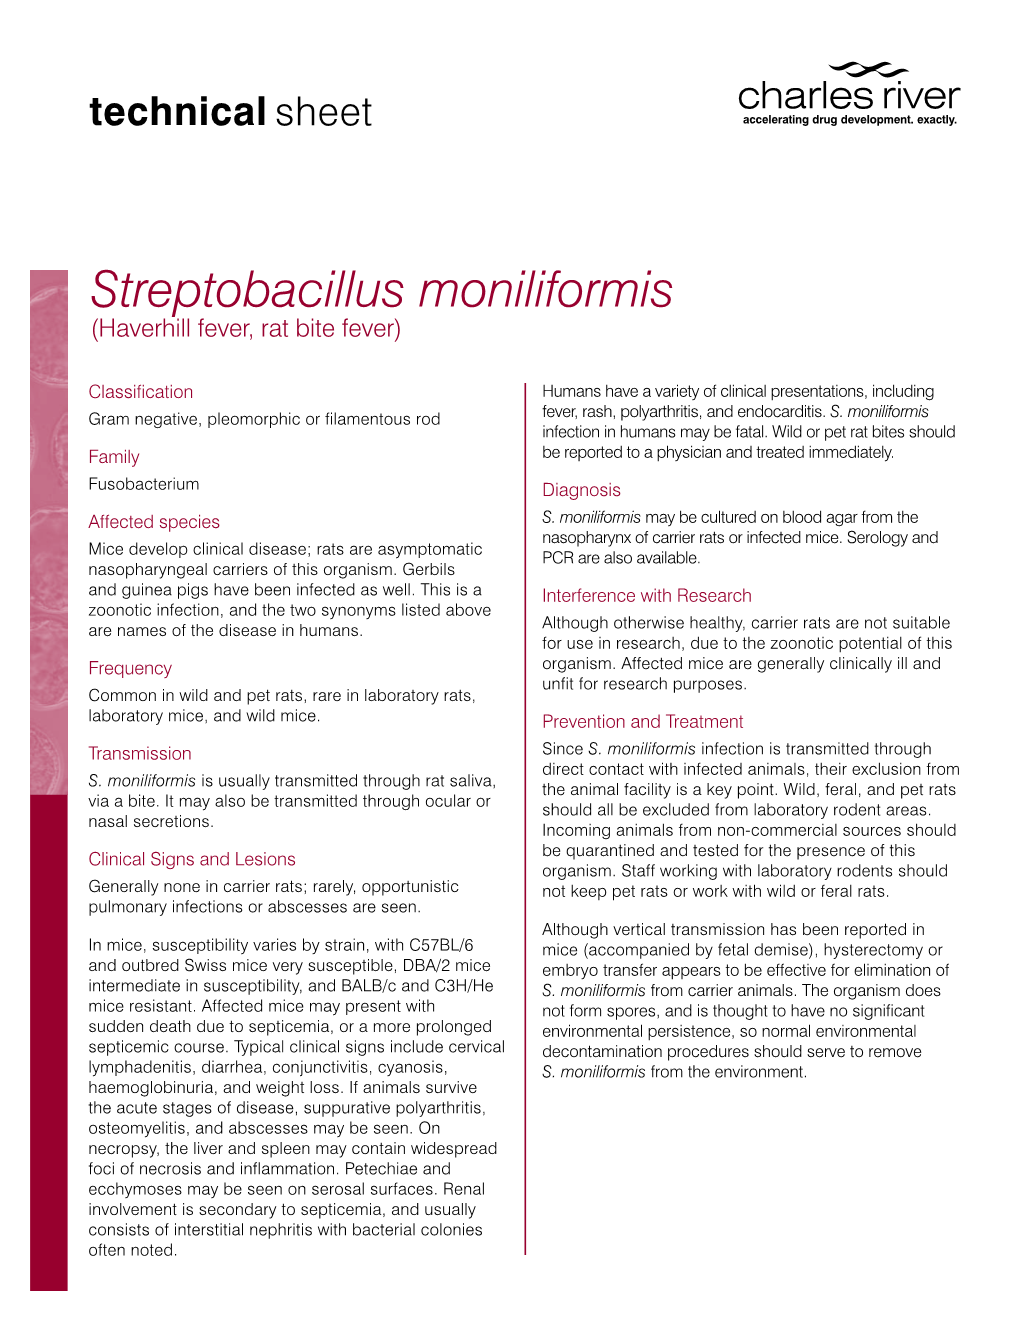 Streptobacillus Moniliformis (Haverhill Fever, Rat Bite Fever)